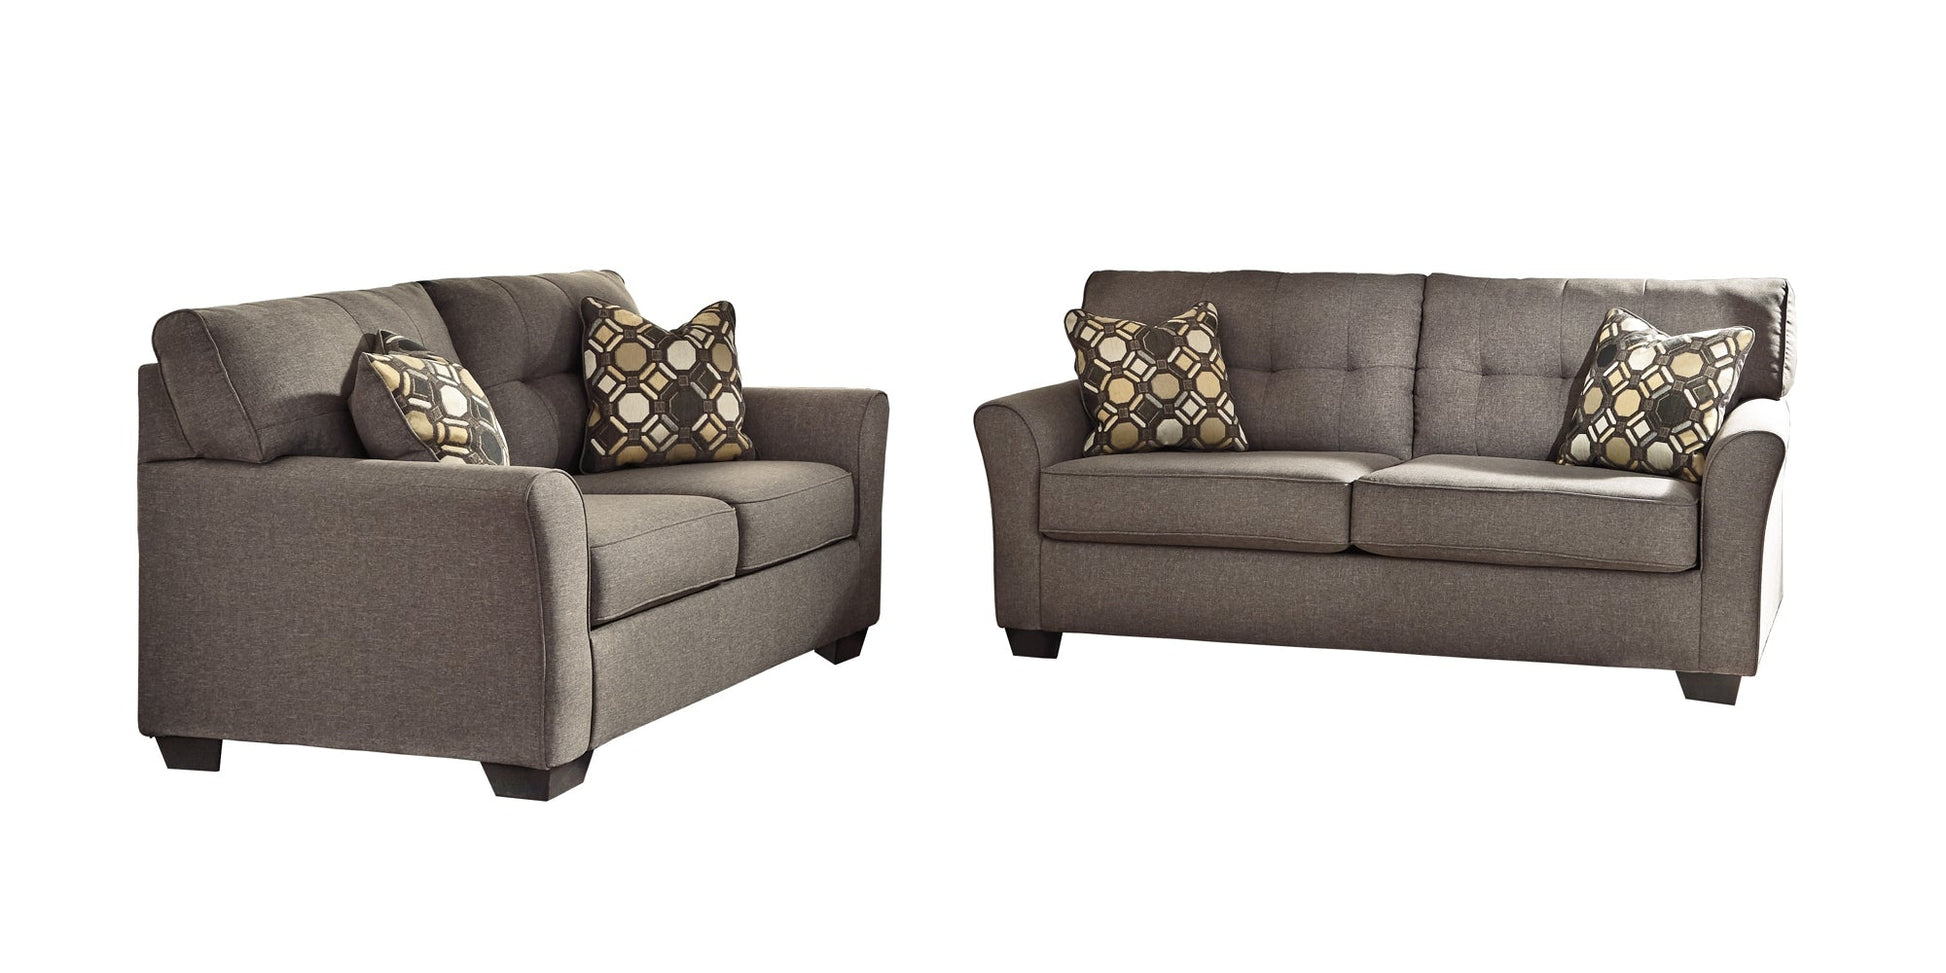 Tibbee Sofa and Loveseat at Cloud 9 Mattress & Furniture furniture, home furnishing, home decor